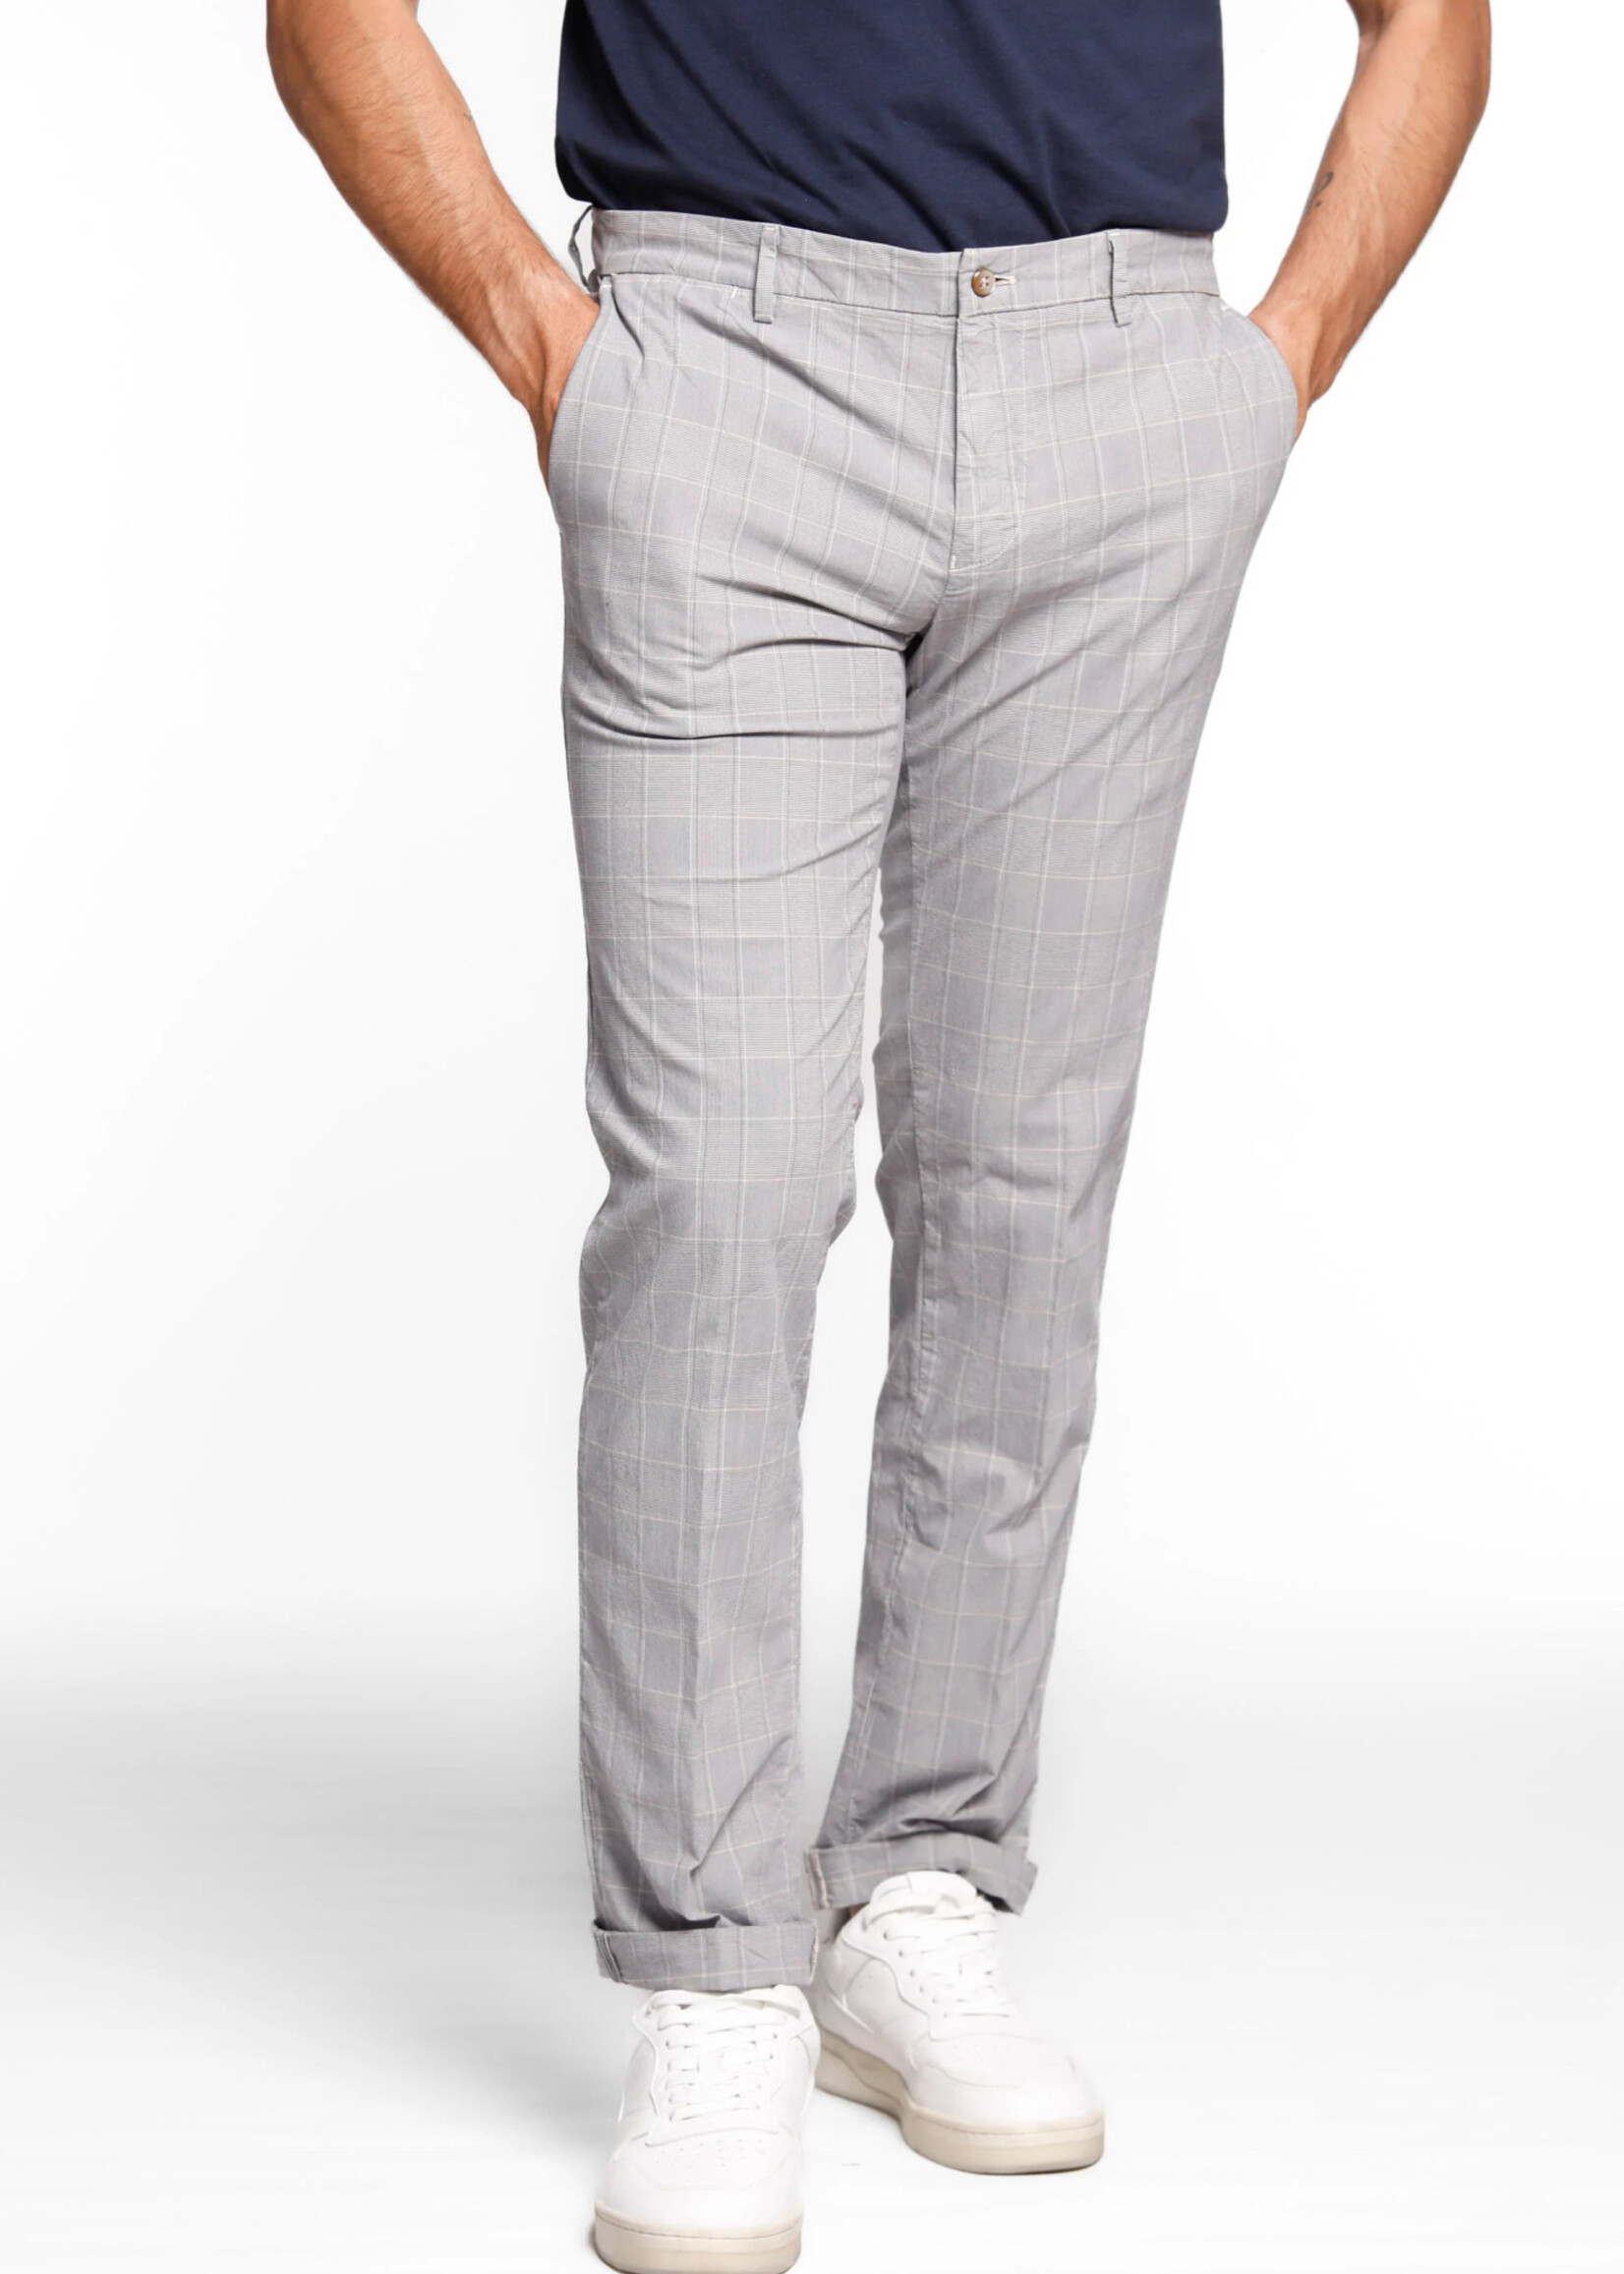 MASON'S Torino Style Pantalon chino pour homme en coton motif Galles slim fit - Gris clair